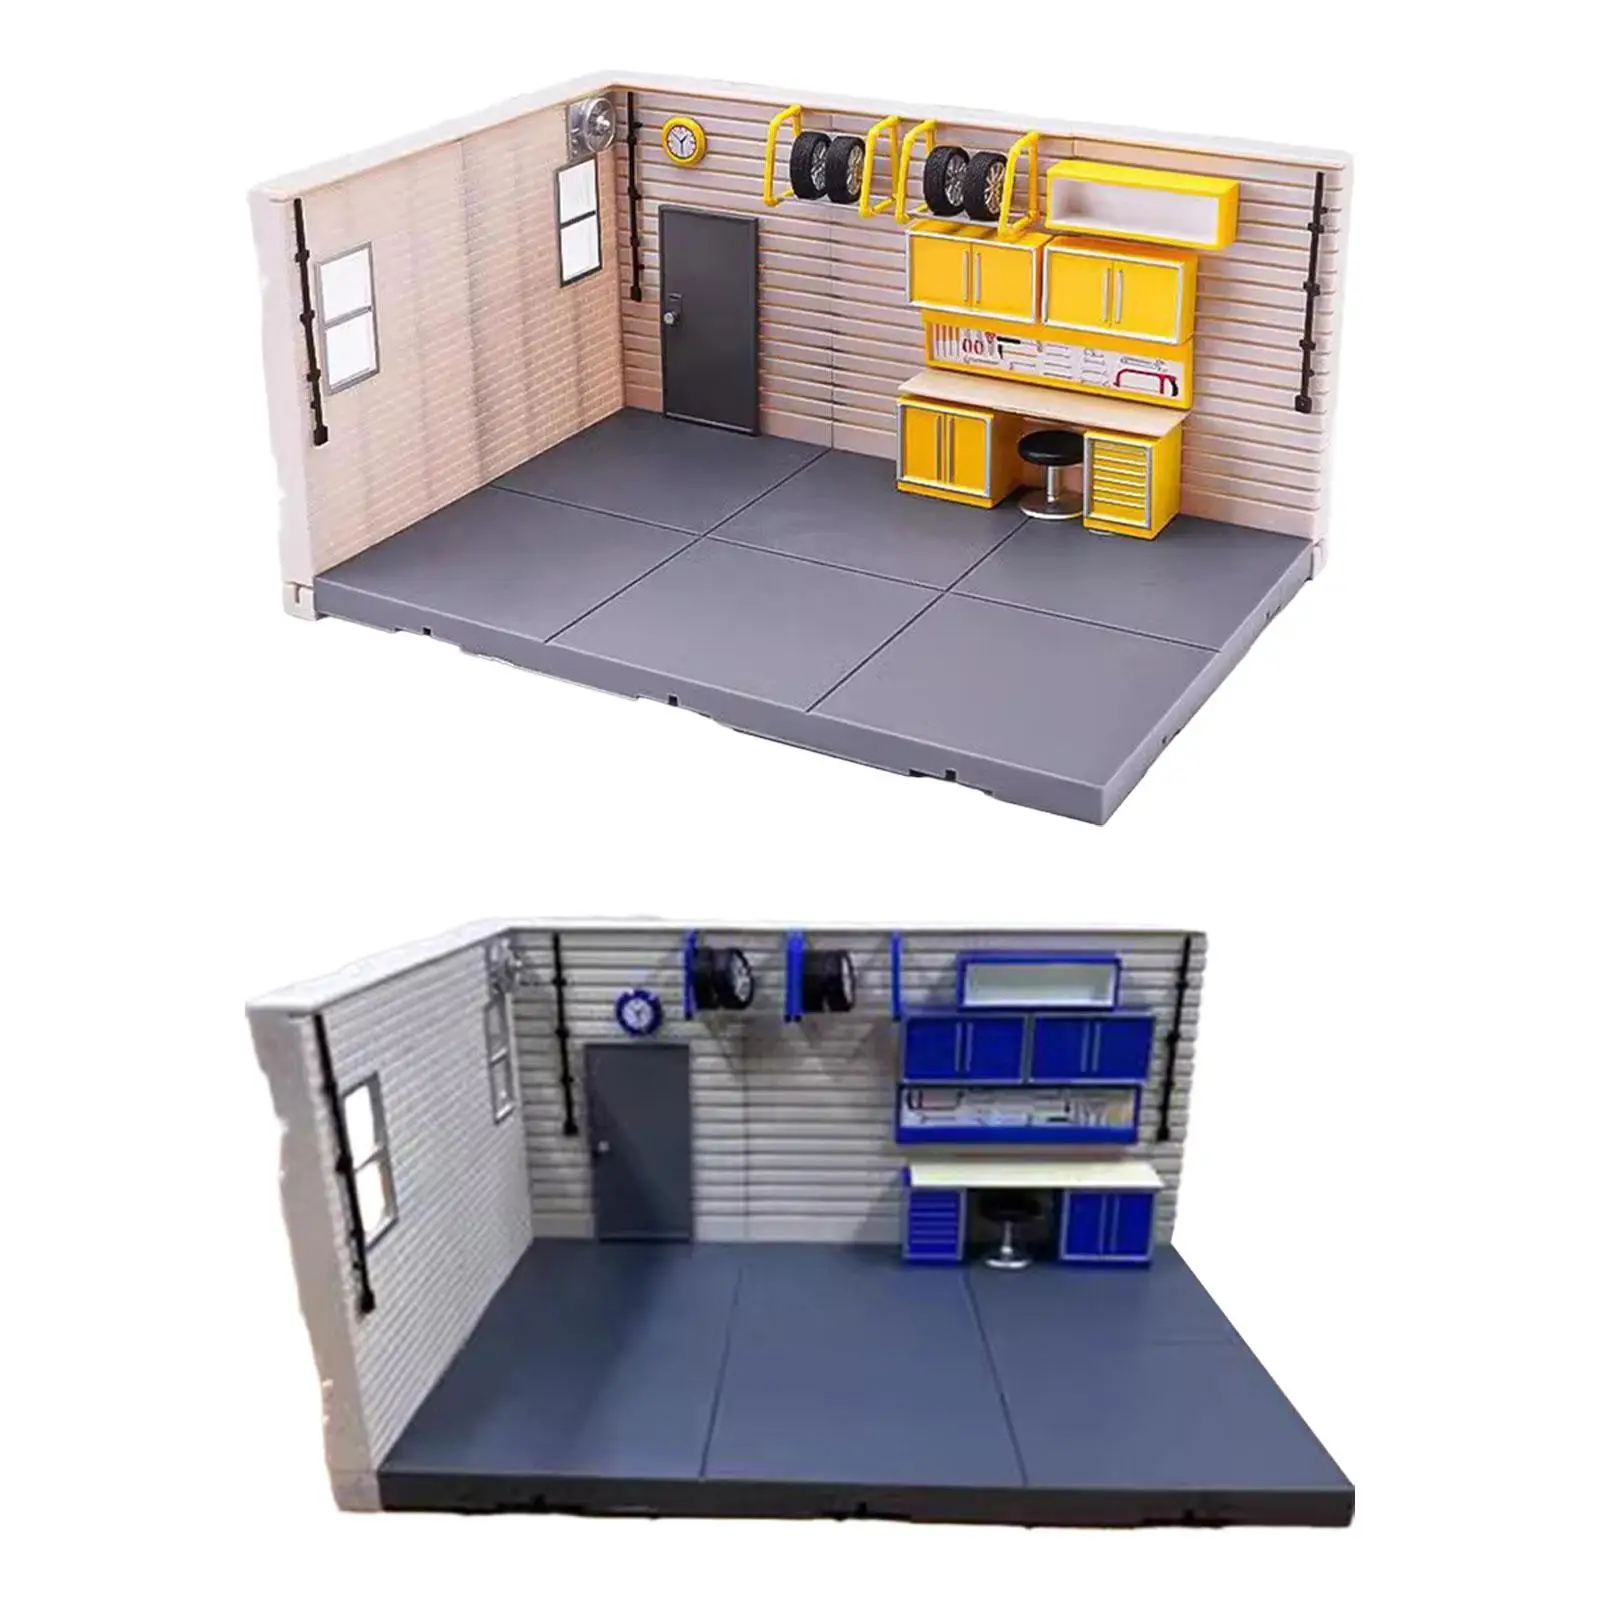 Garage Diorama  Garage diorama with three 1/43 scale Ford E